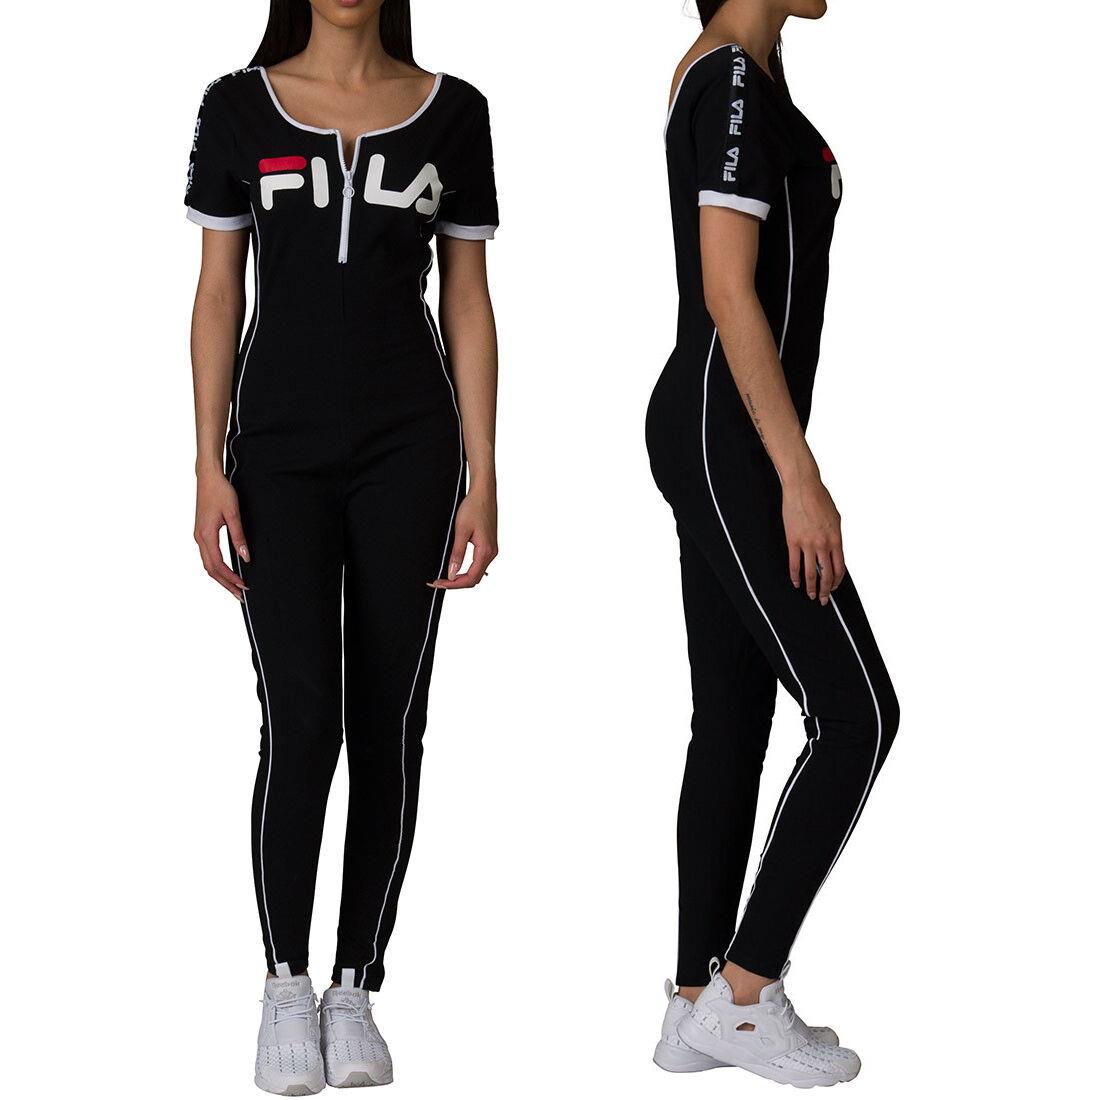 Fila High Neck Unitard Legging Jumpsuit with Front Zip LW171XS9 Gina Unitard